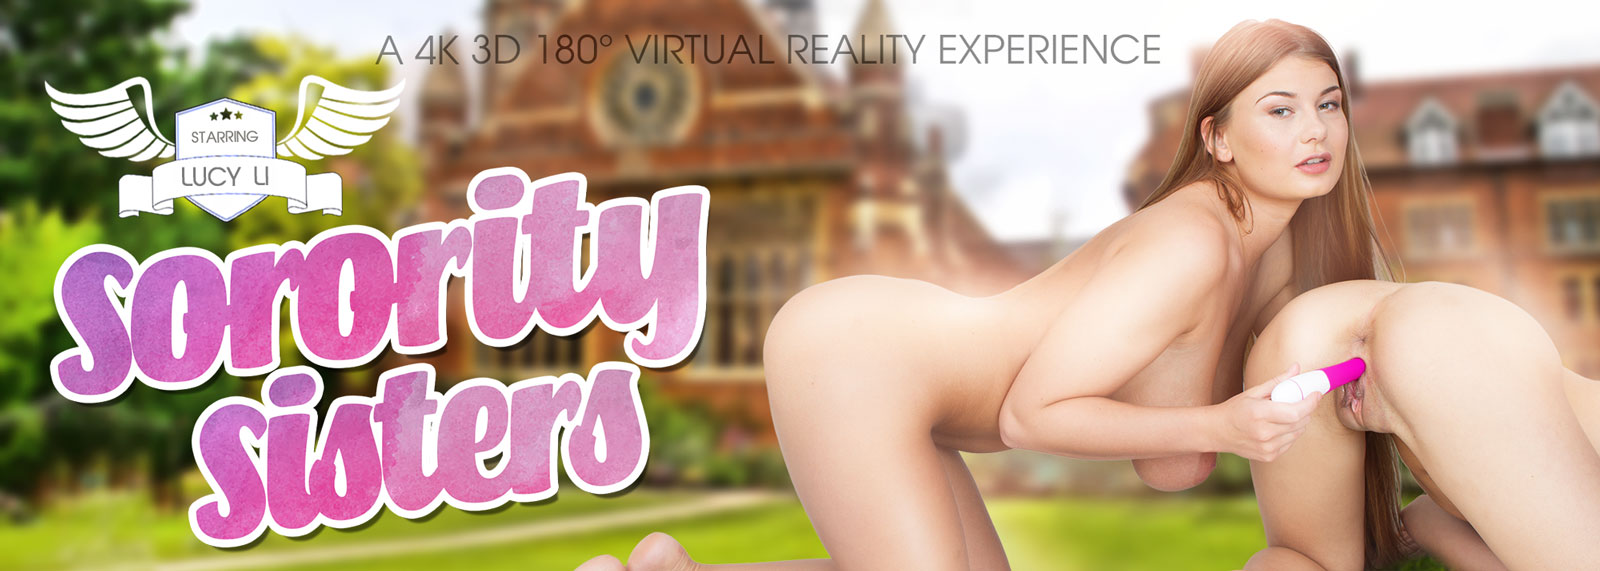 Sorority Sisters - VR Porn Video, Starring: Lady Dee, Lucy Li